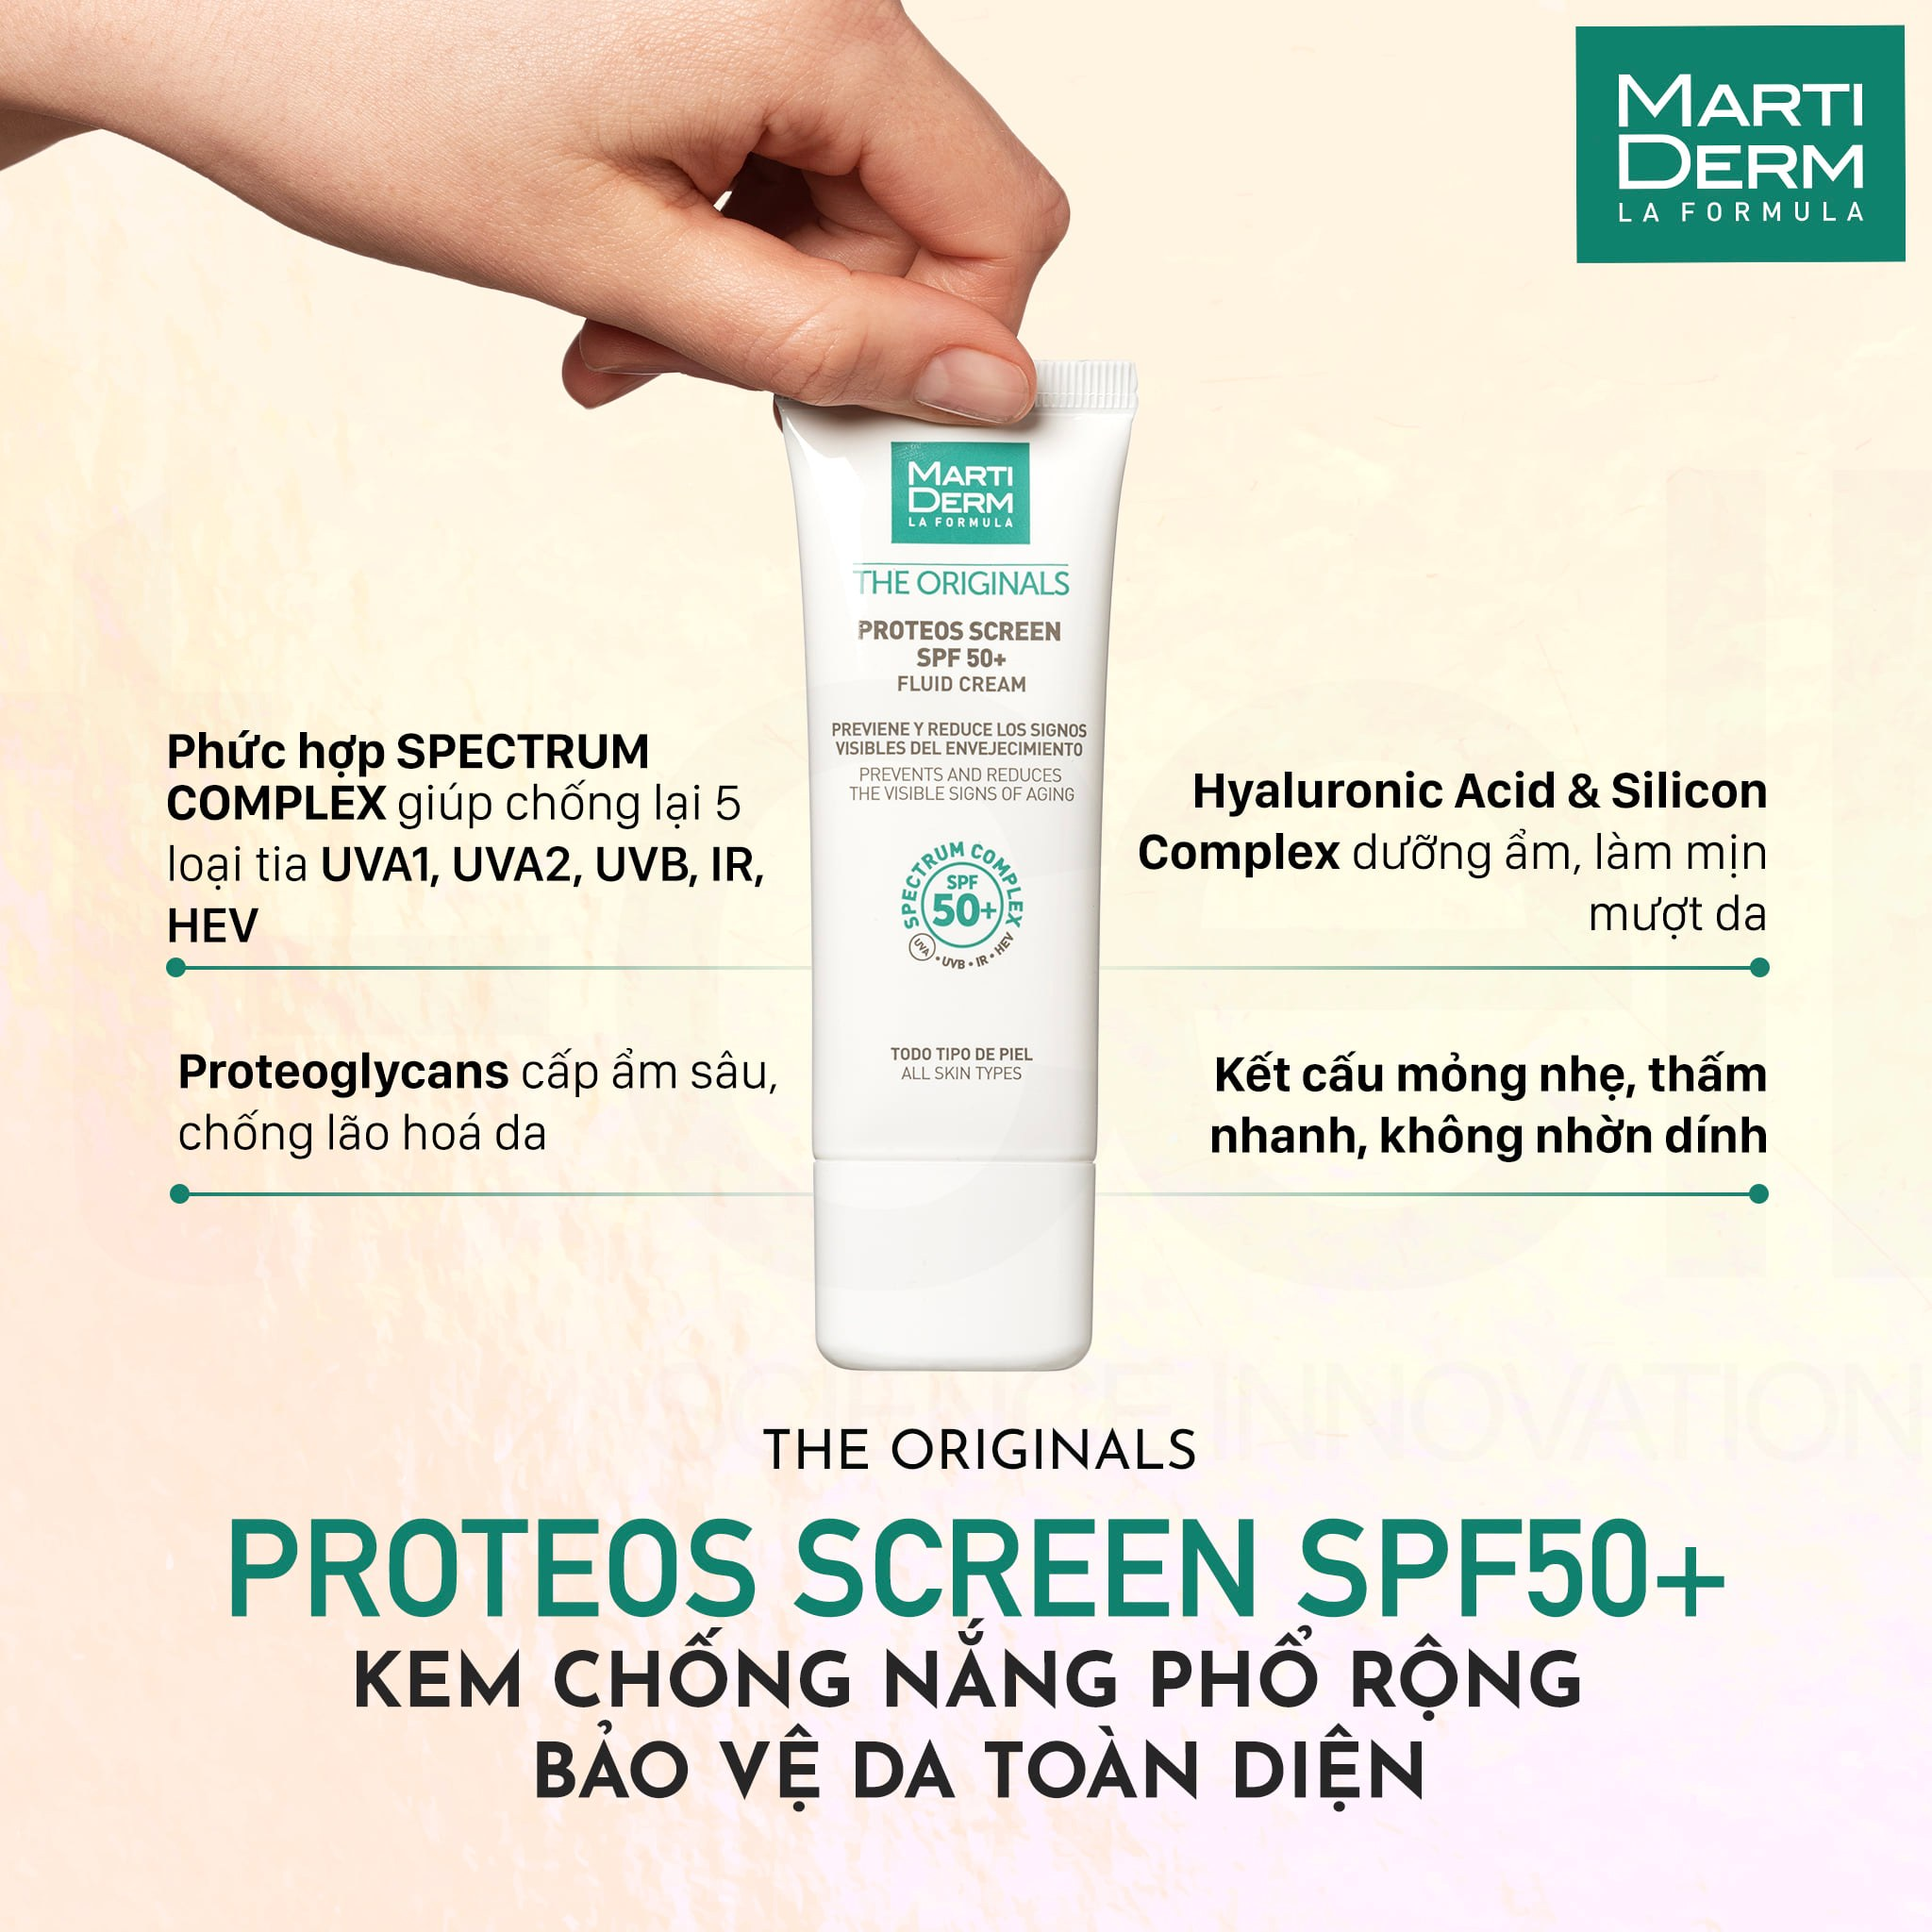 REVIEW Kem Chống Nắng Phổ Rộng MartiDerm The Originals Proteos Screen SPF50+ Fluid Cream